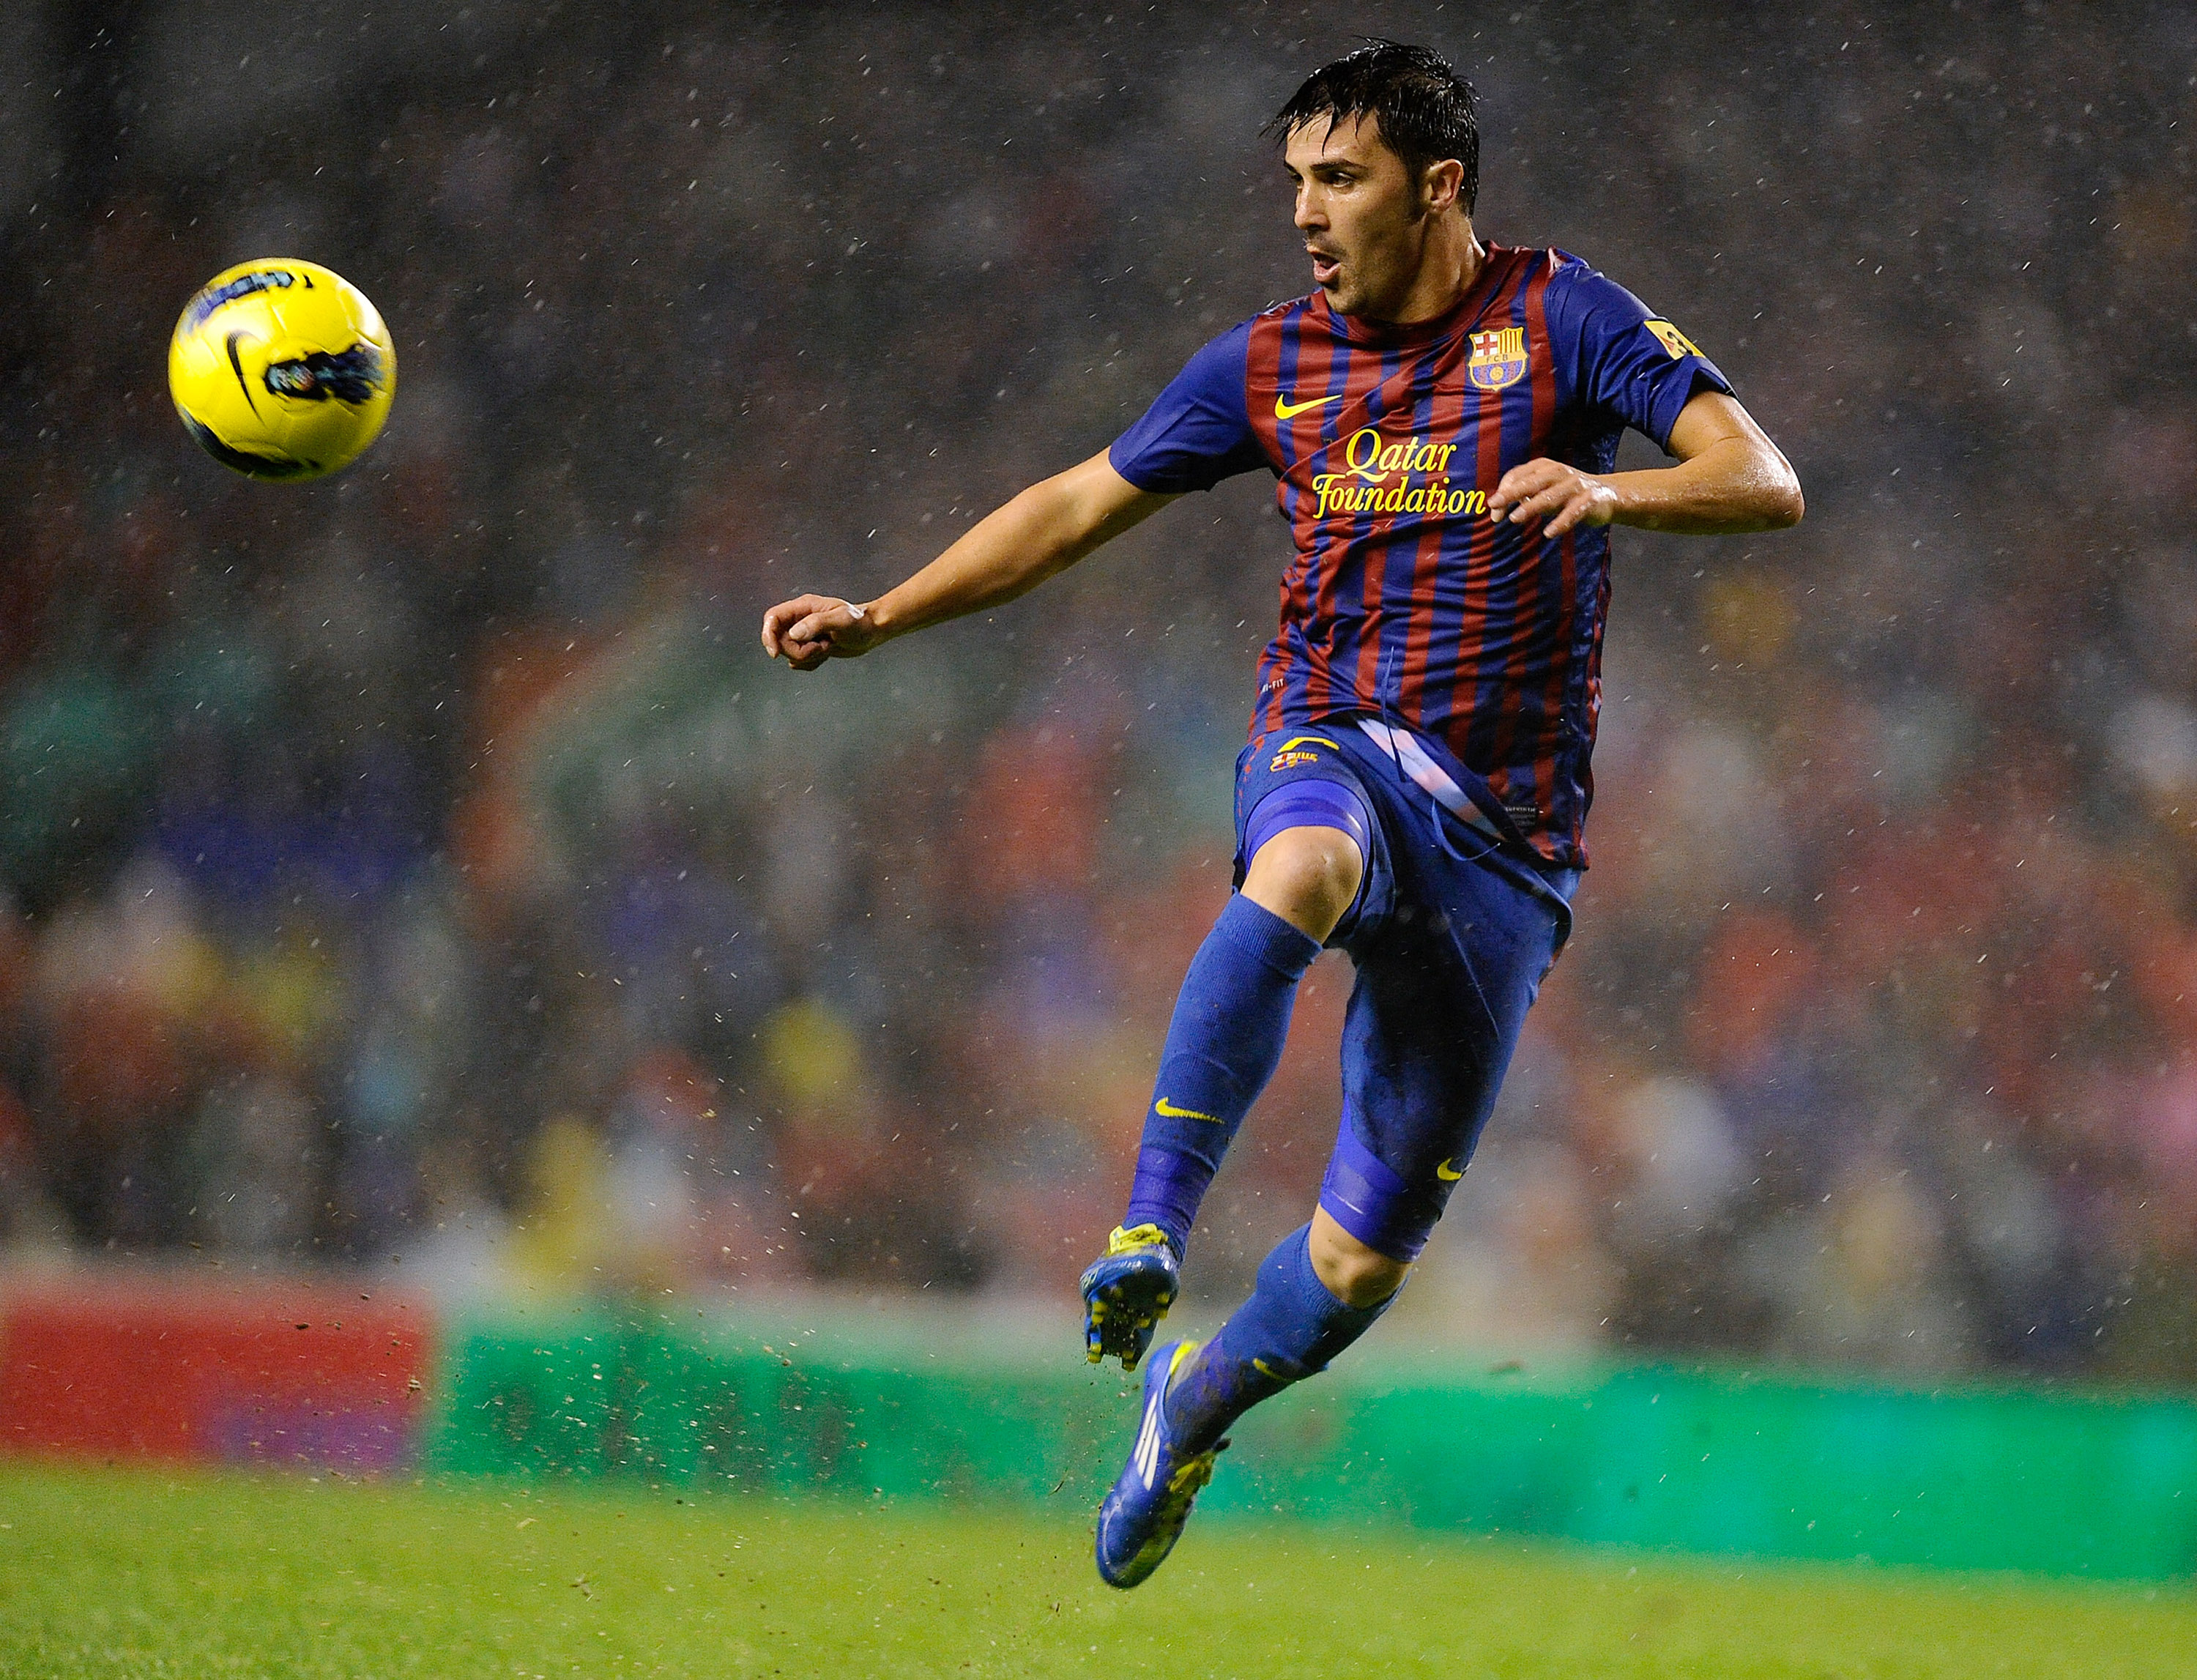 Barcelona's David Villa controls a ball against Athletic Club at San Mames in November 2011.